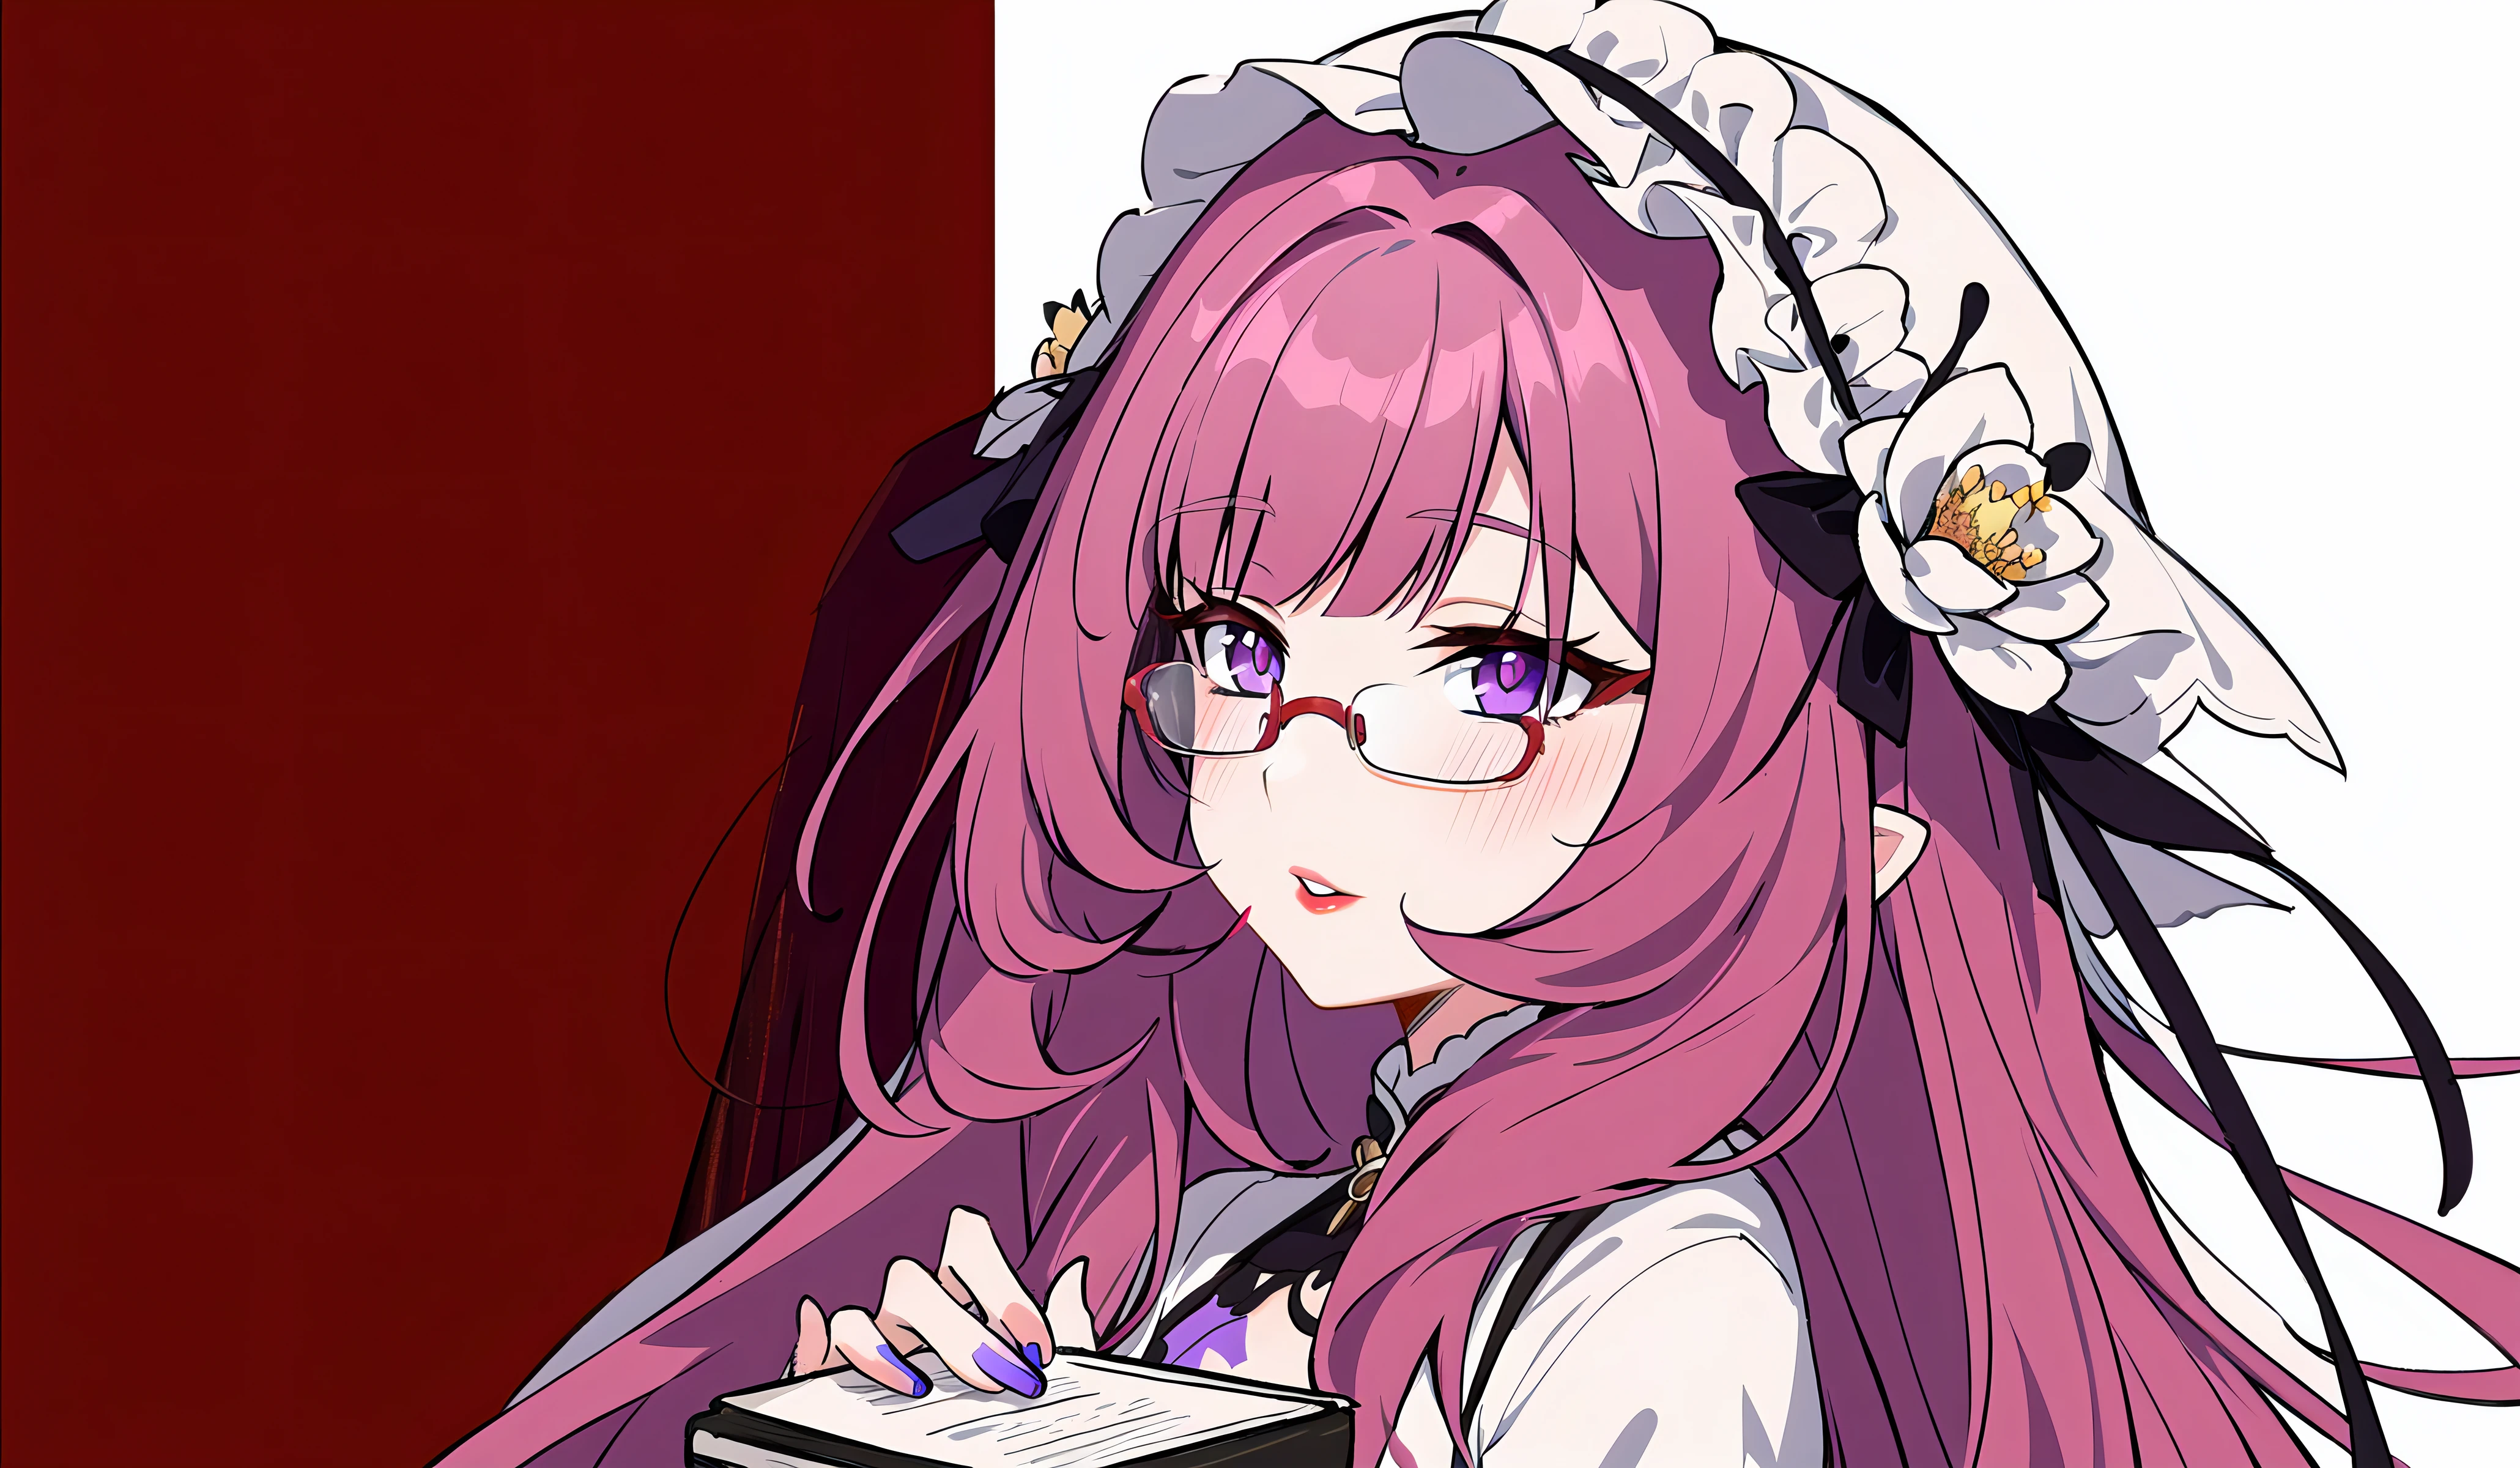 Anime 4120x2400 anime anime girls long hair glasses blushing purple eyes pointy ears hat painted nails minimalism simple background AI art